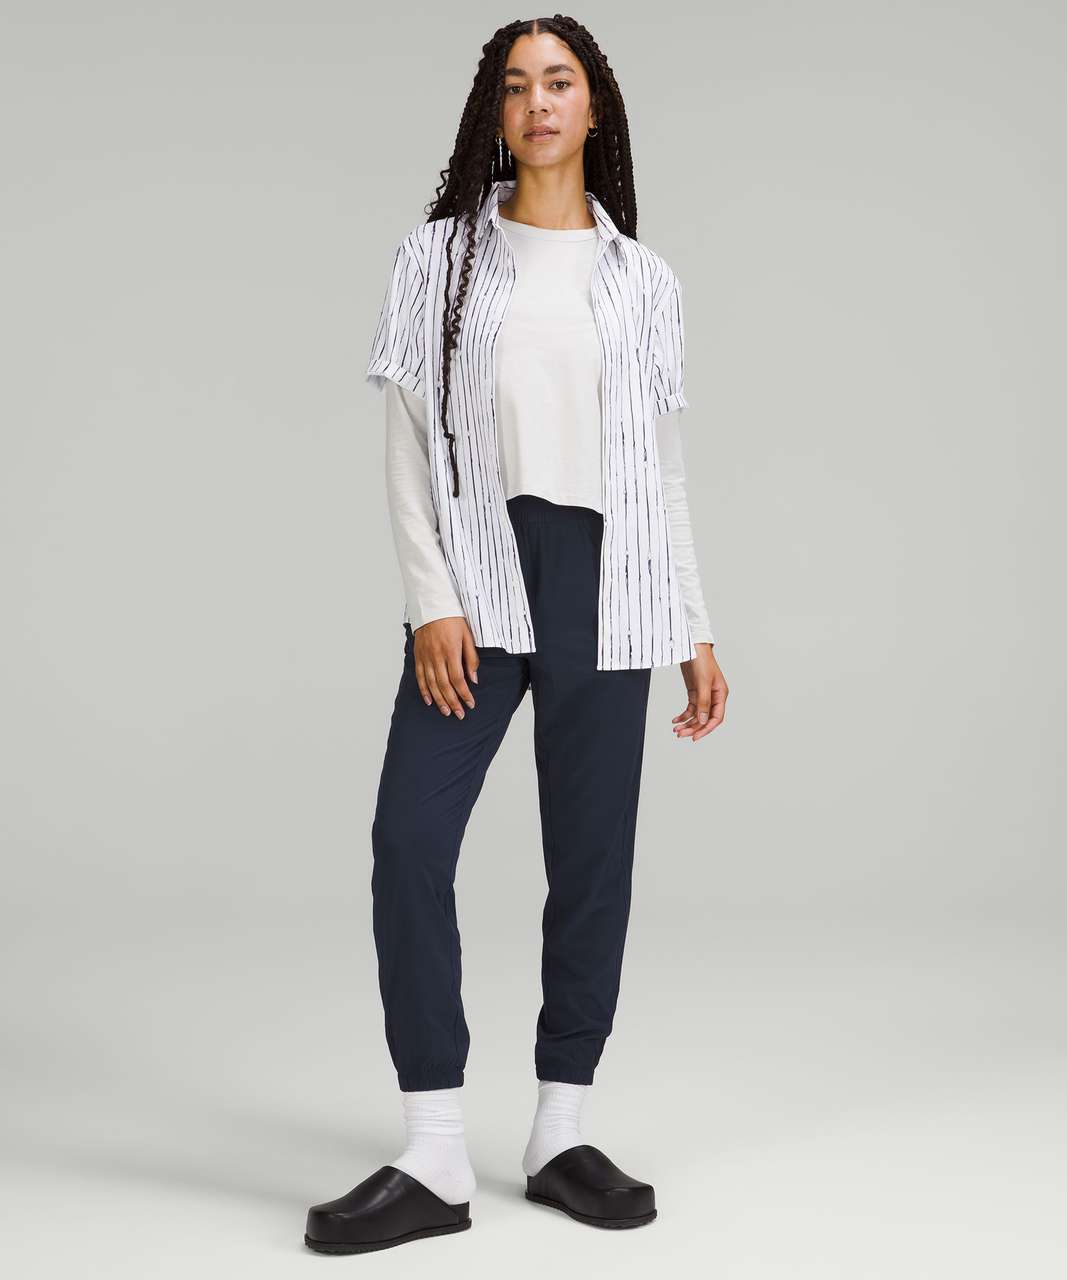 Lululemon Classic-Fit Cotton-Blend Long Sleeve Shirt - Vapor